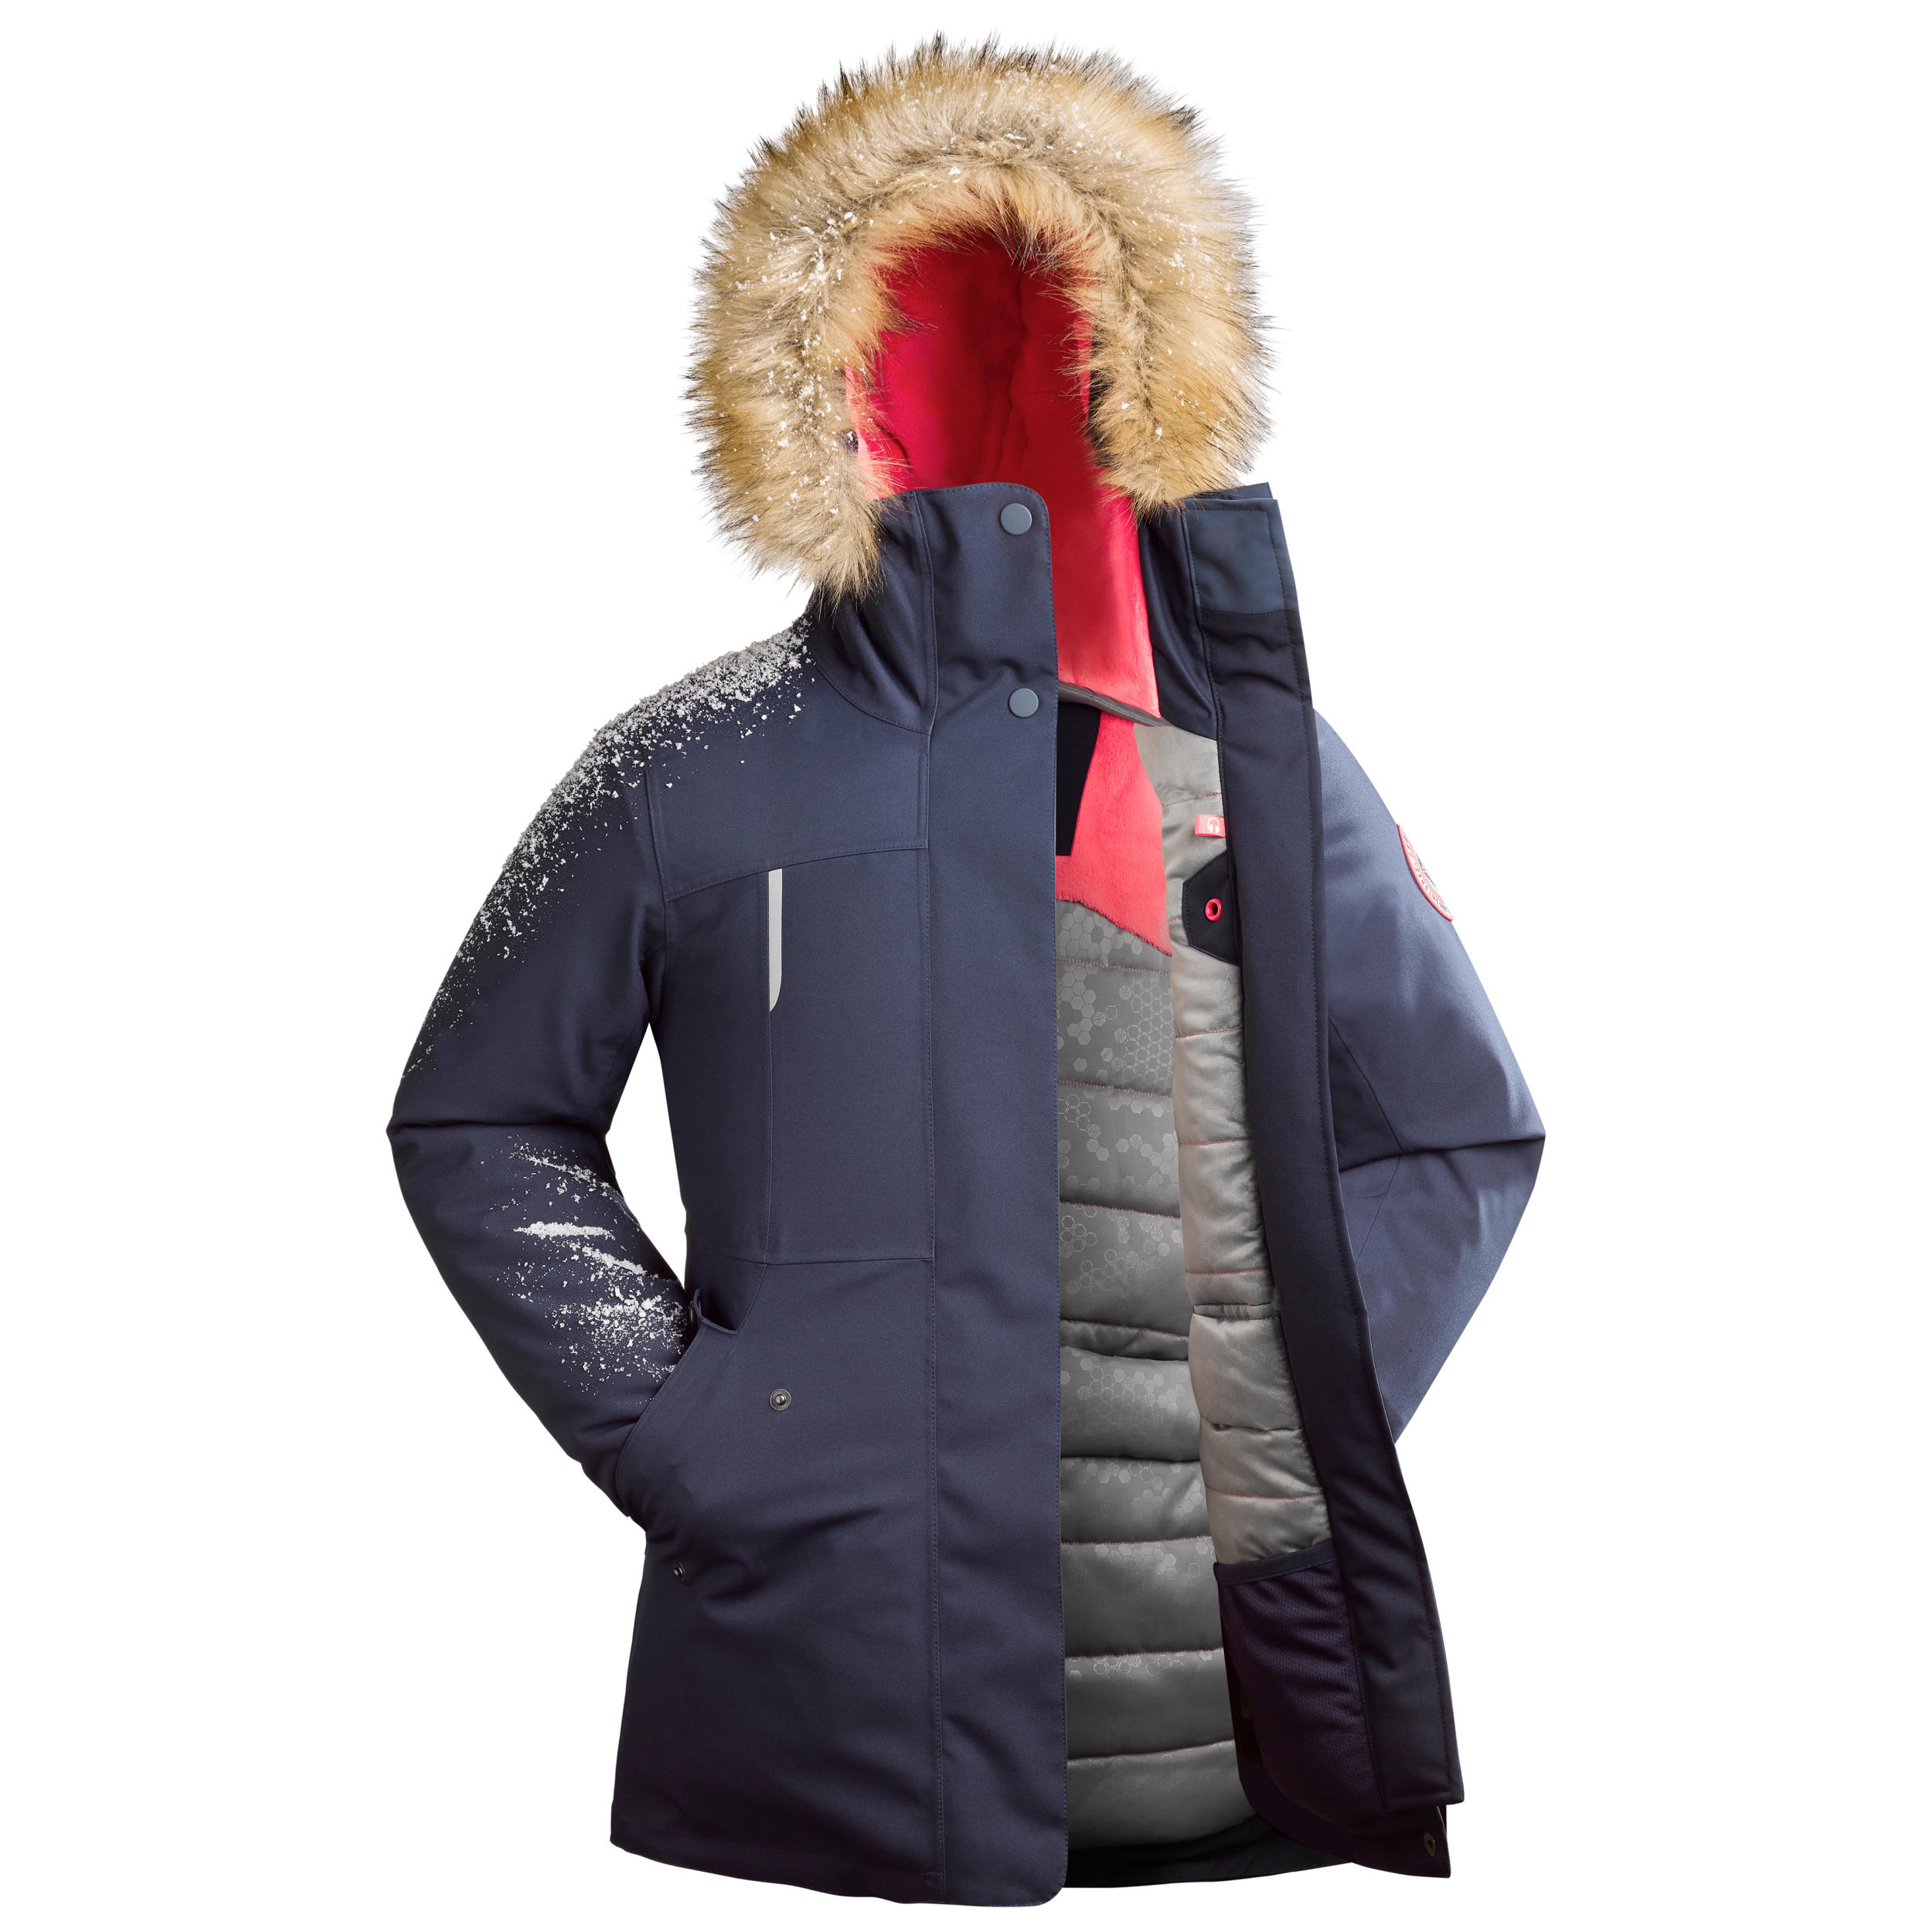 Manteau de randonnée enfant – U-Warm SH 500 bleu marine - QUECHUA